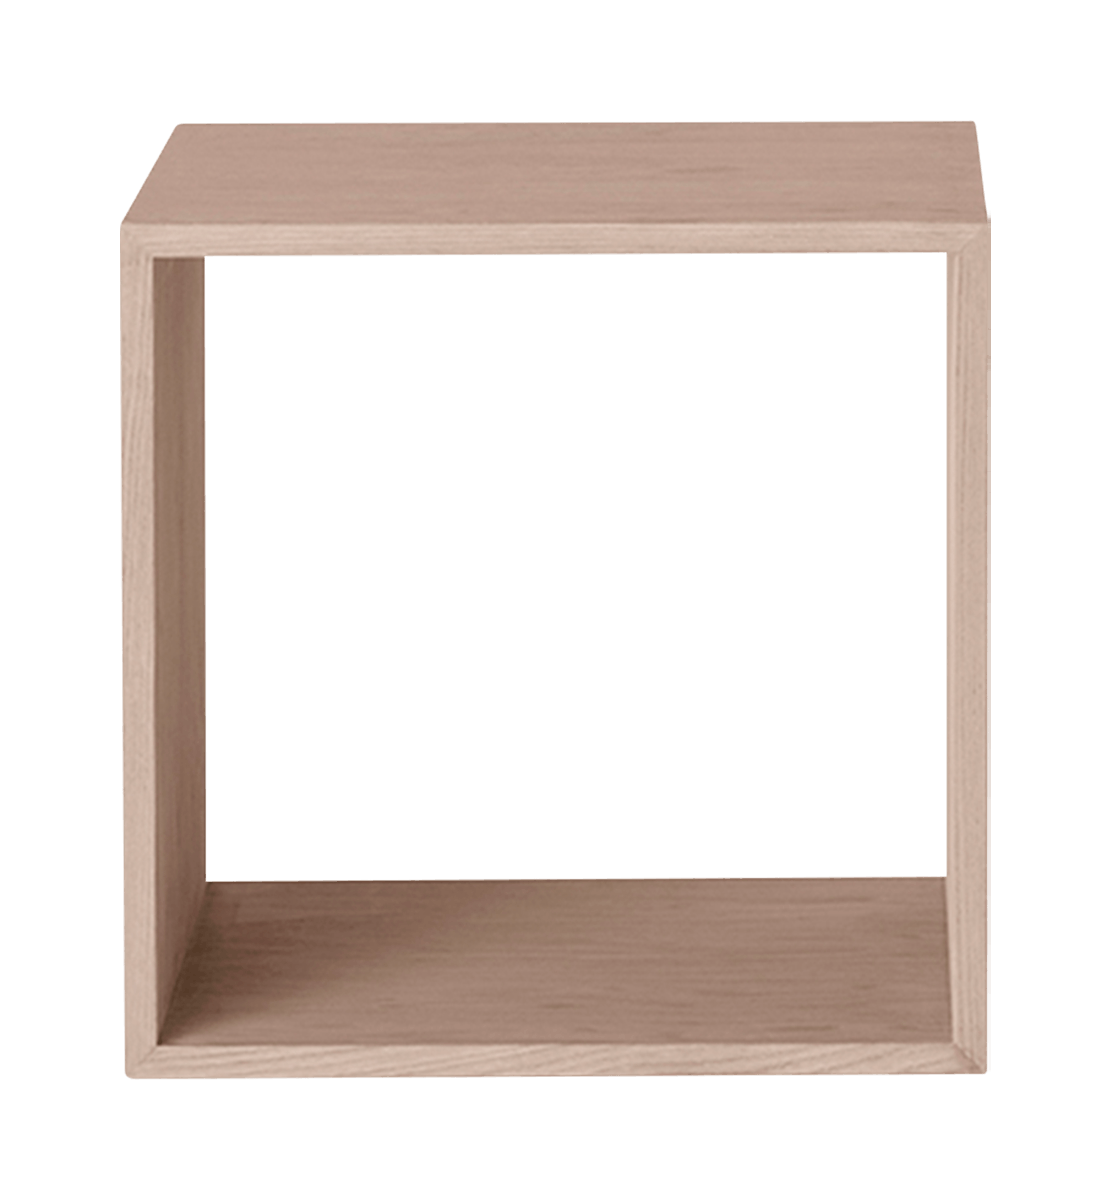 Stacked Storage Box, Medium - Open